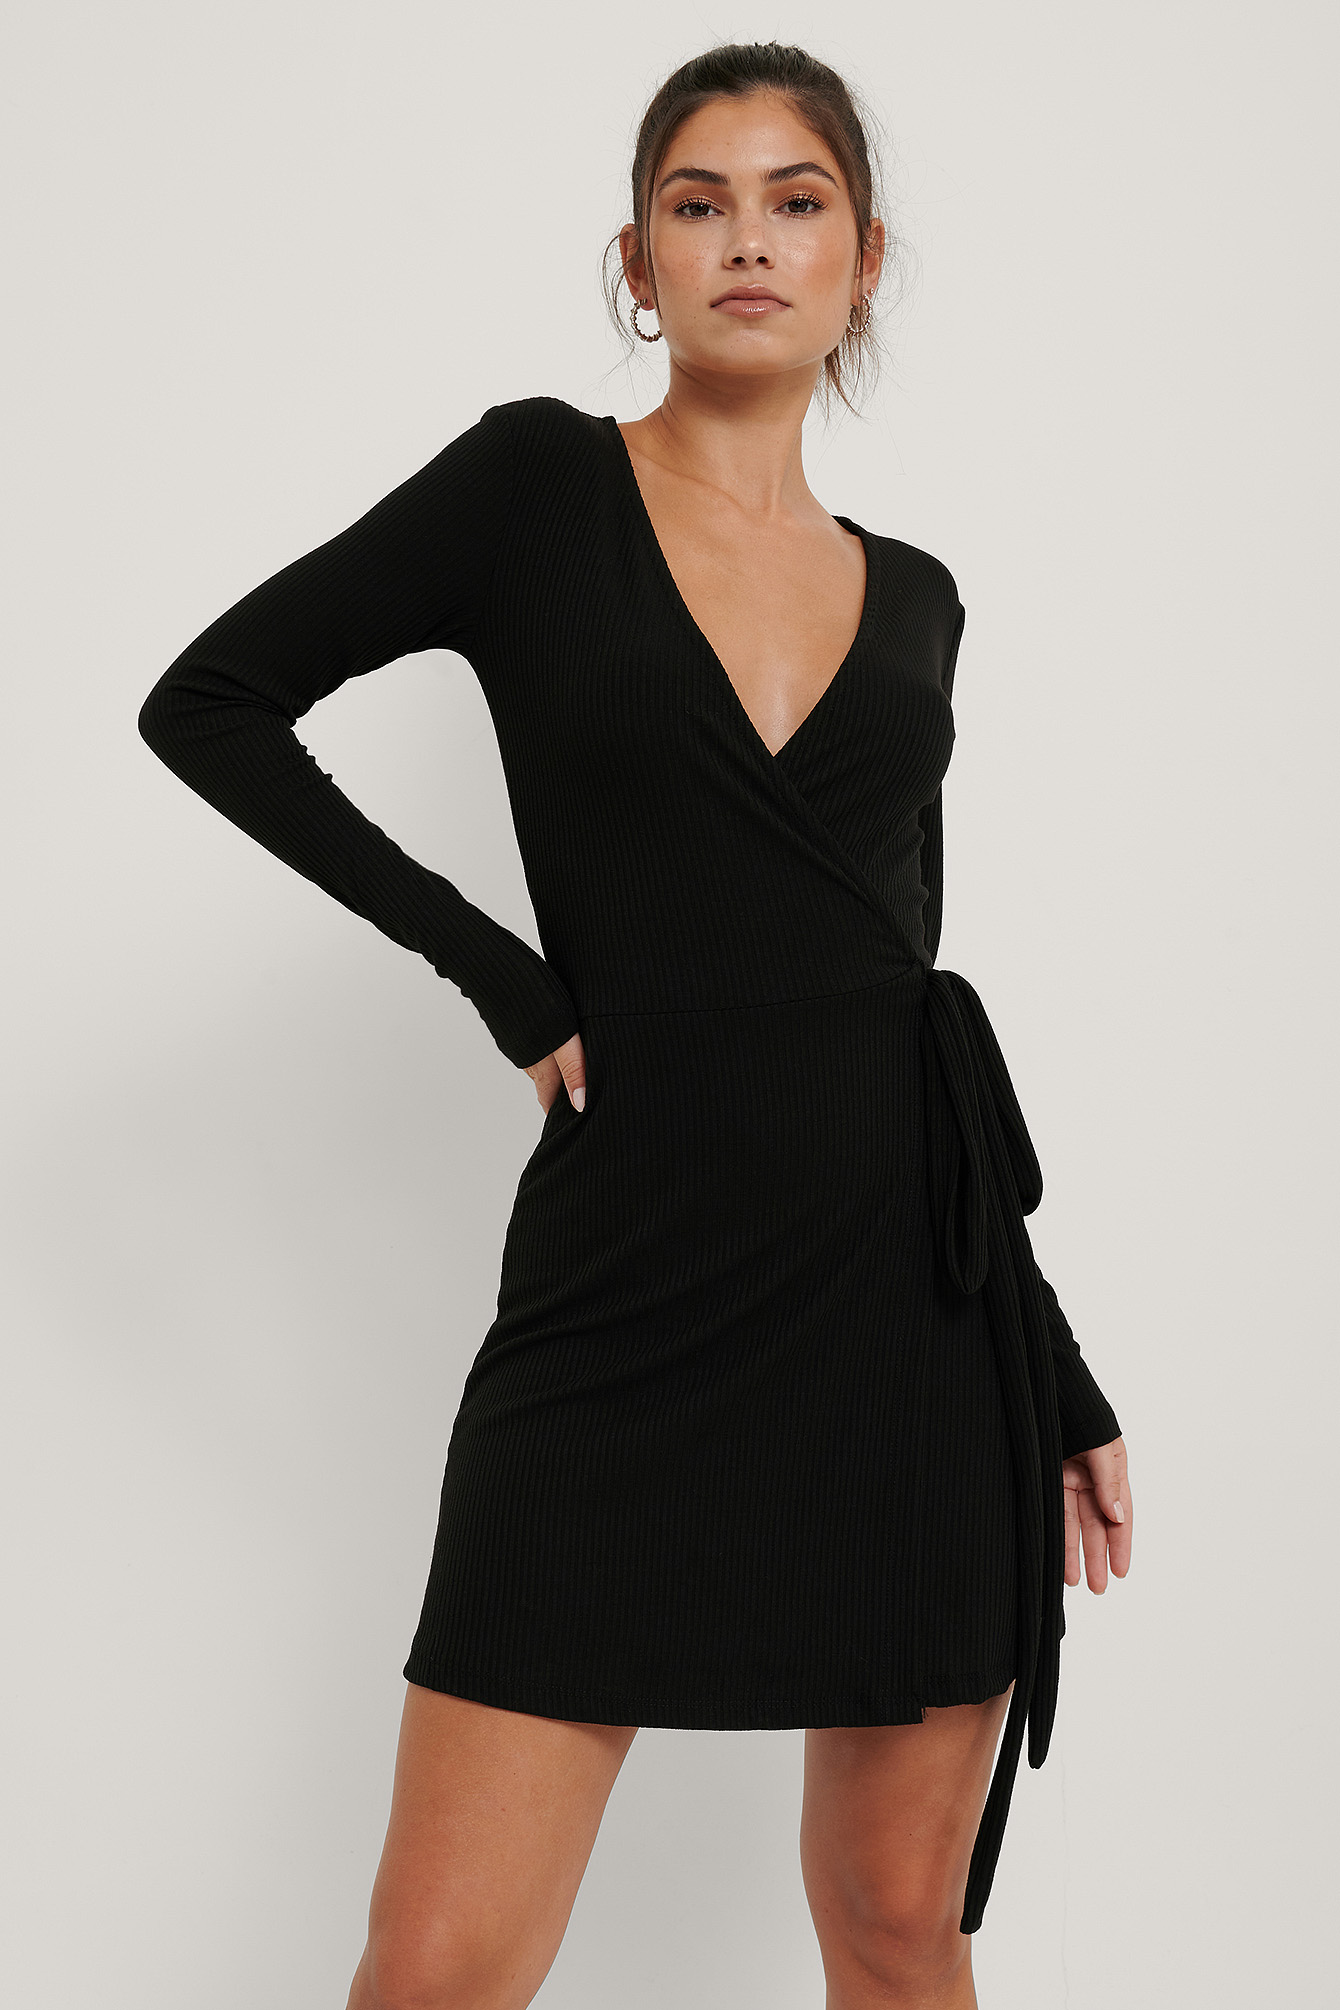 Fashion Dresses Jersey Dresses Jersey Dress black business style Creation L 